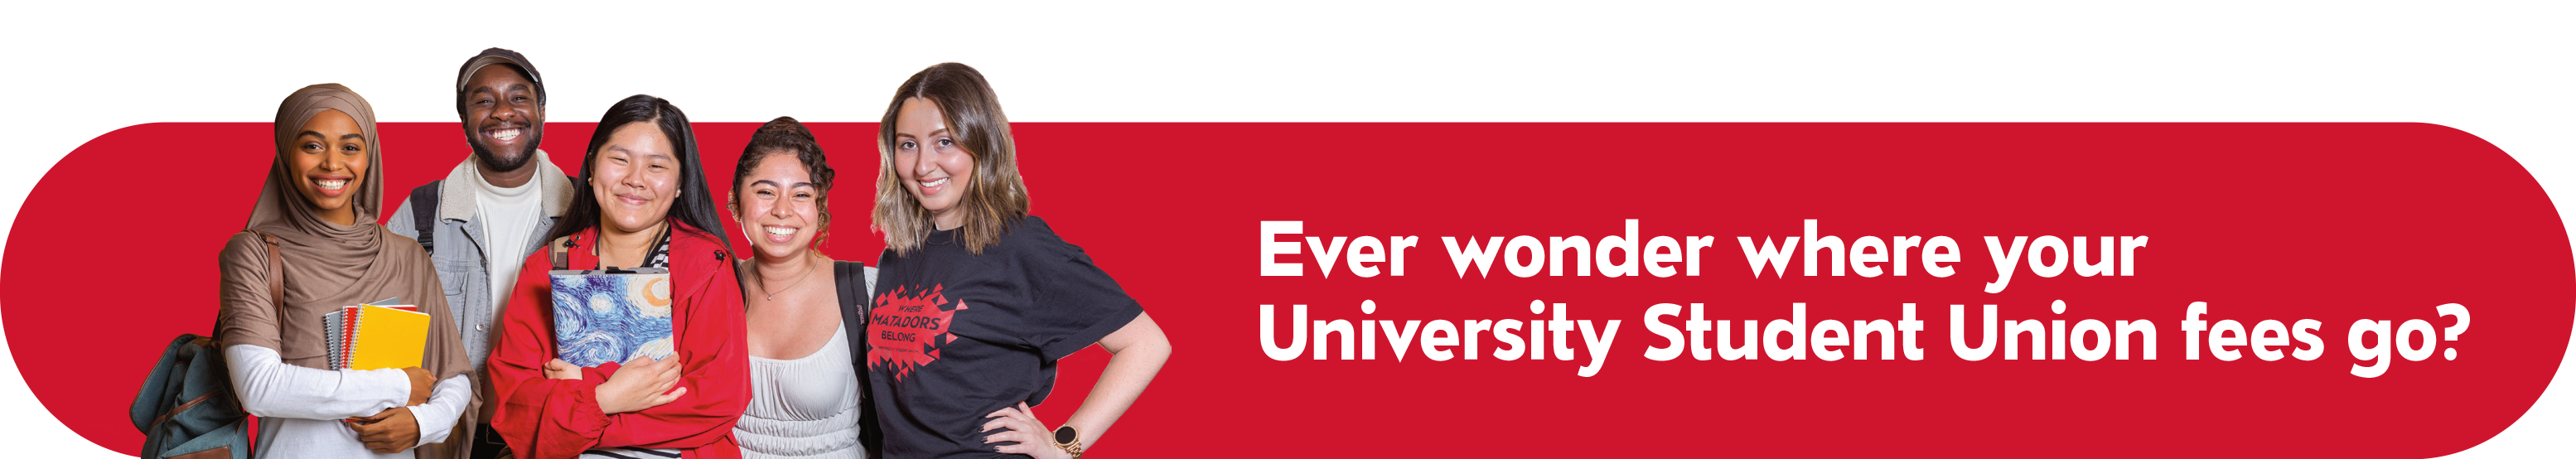 Ever wonder where your University Student Union fees go?